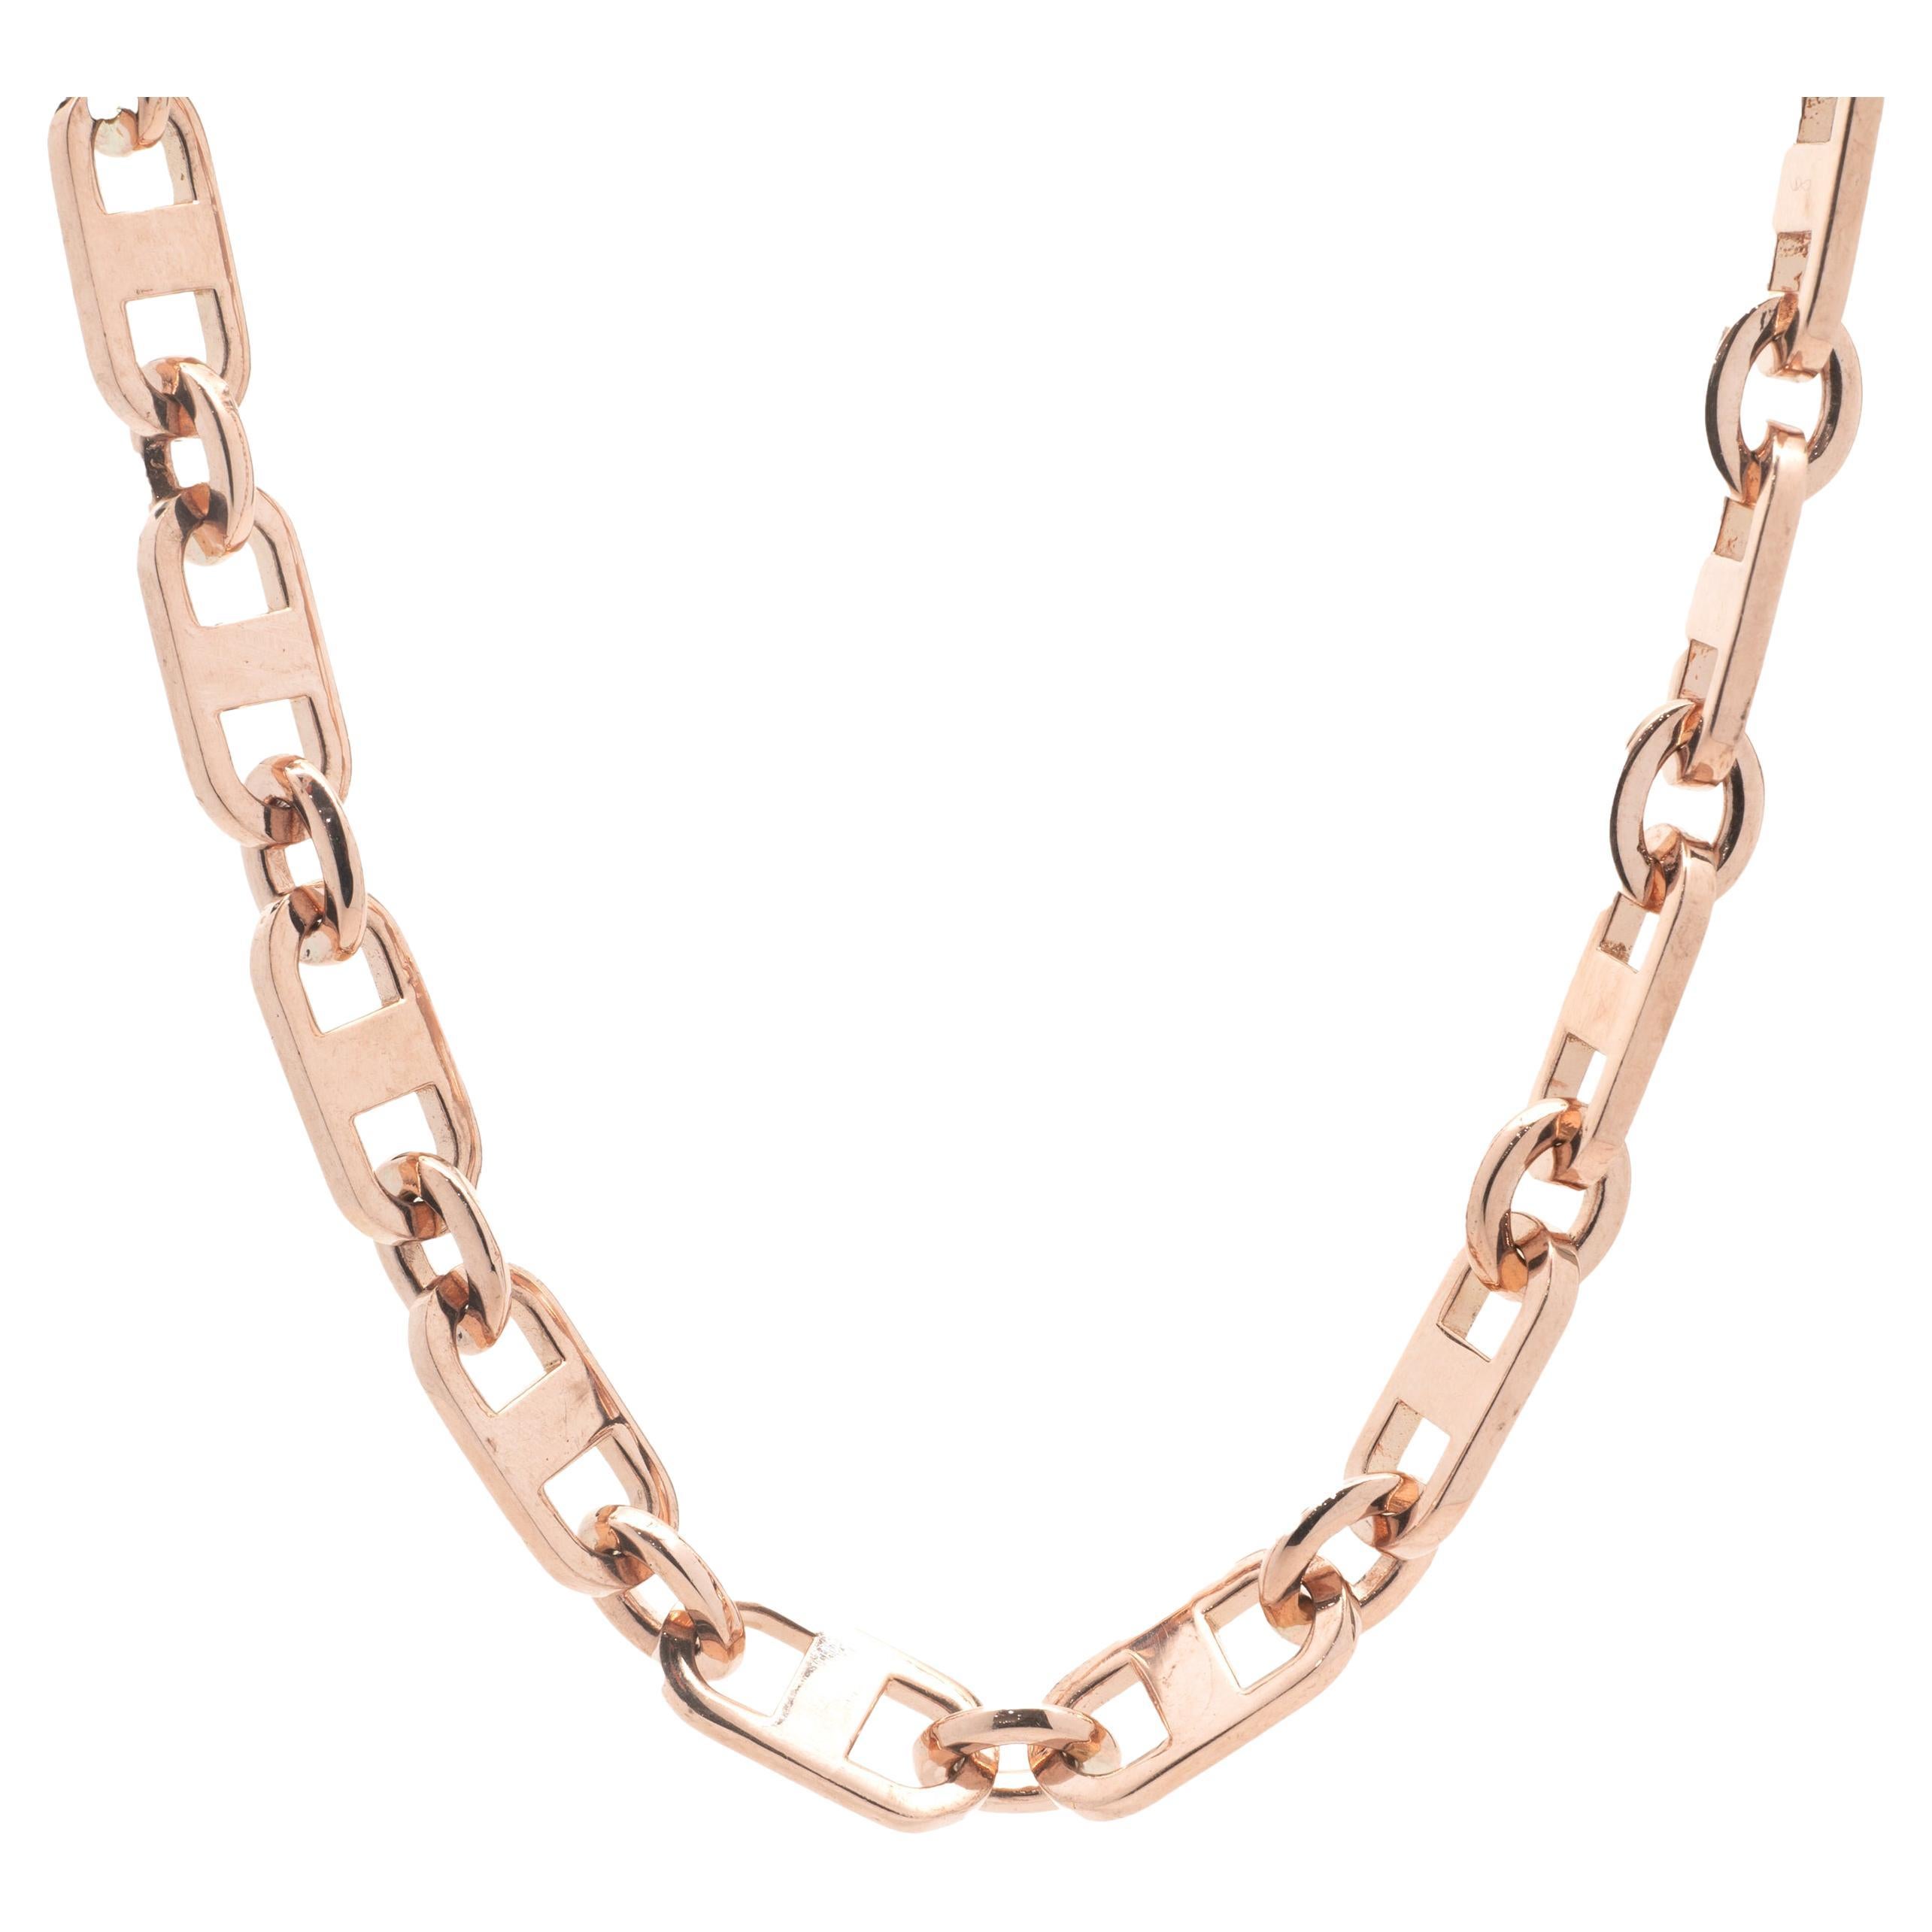 14 Karat Rose Gold Square Link Chain Necklace